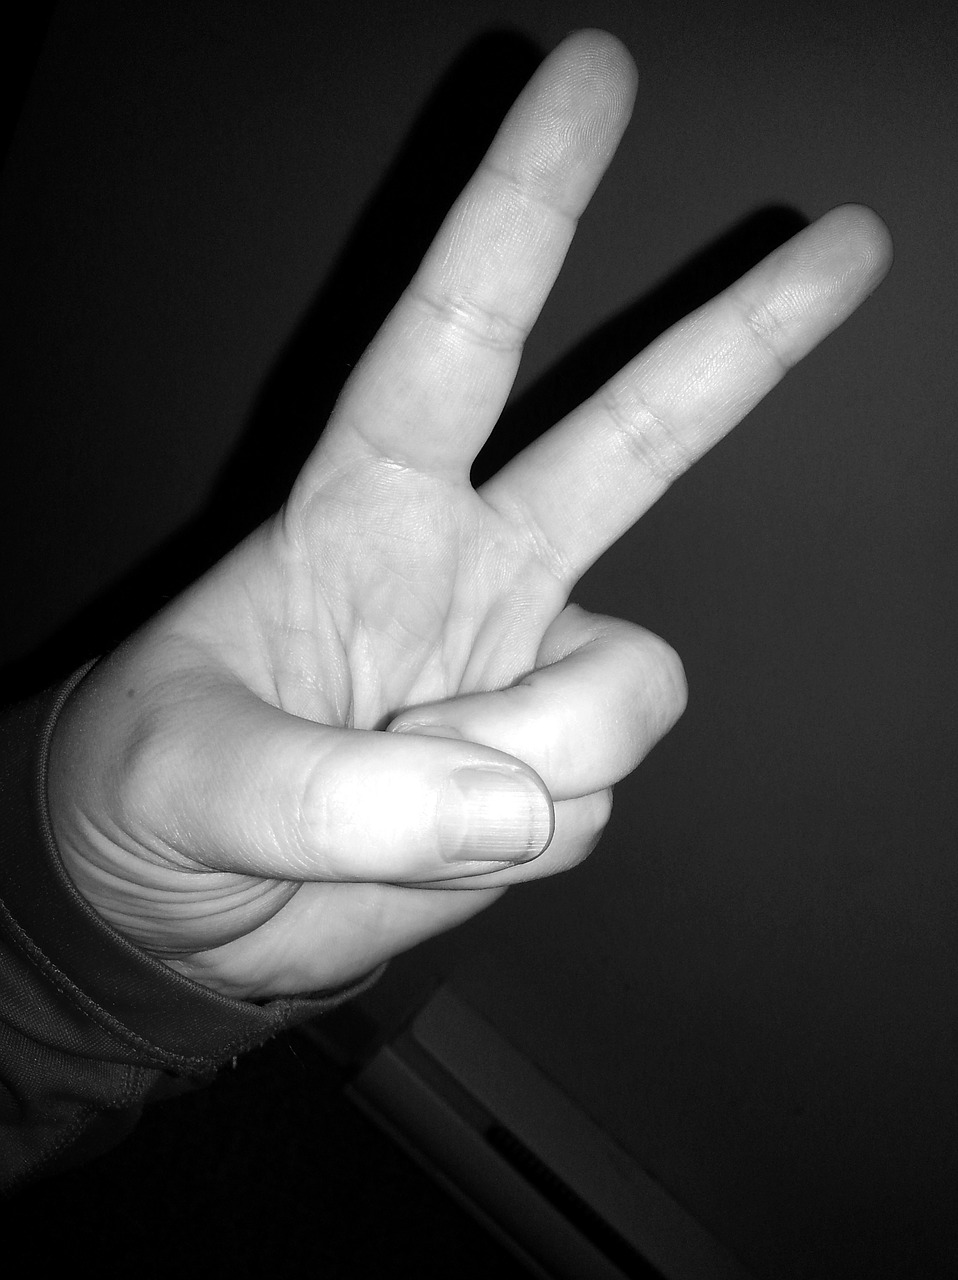 peace finger sign sign language free photo